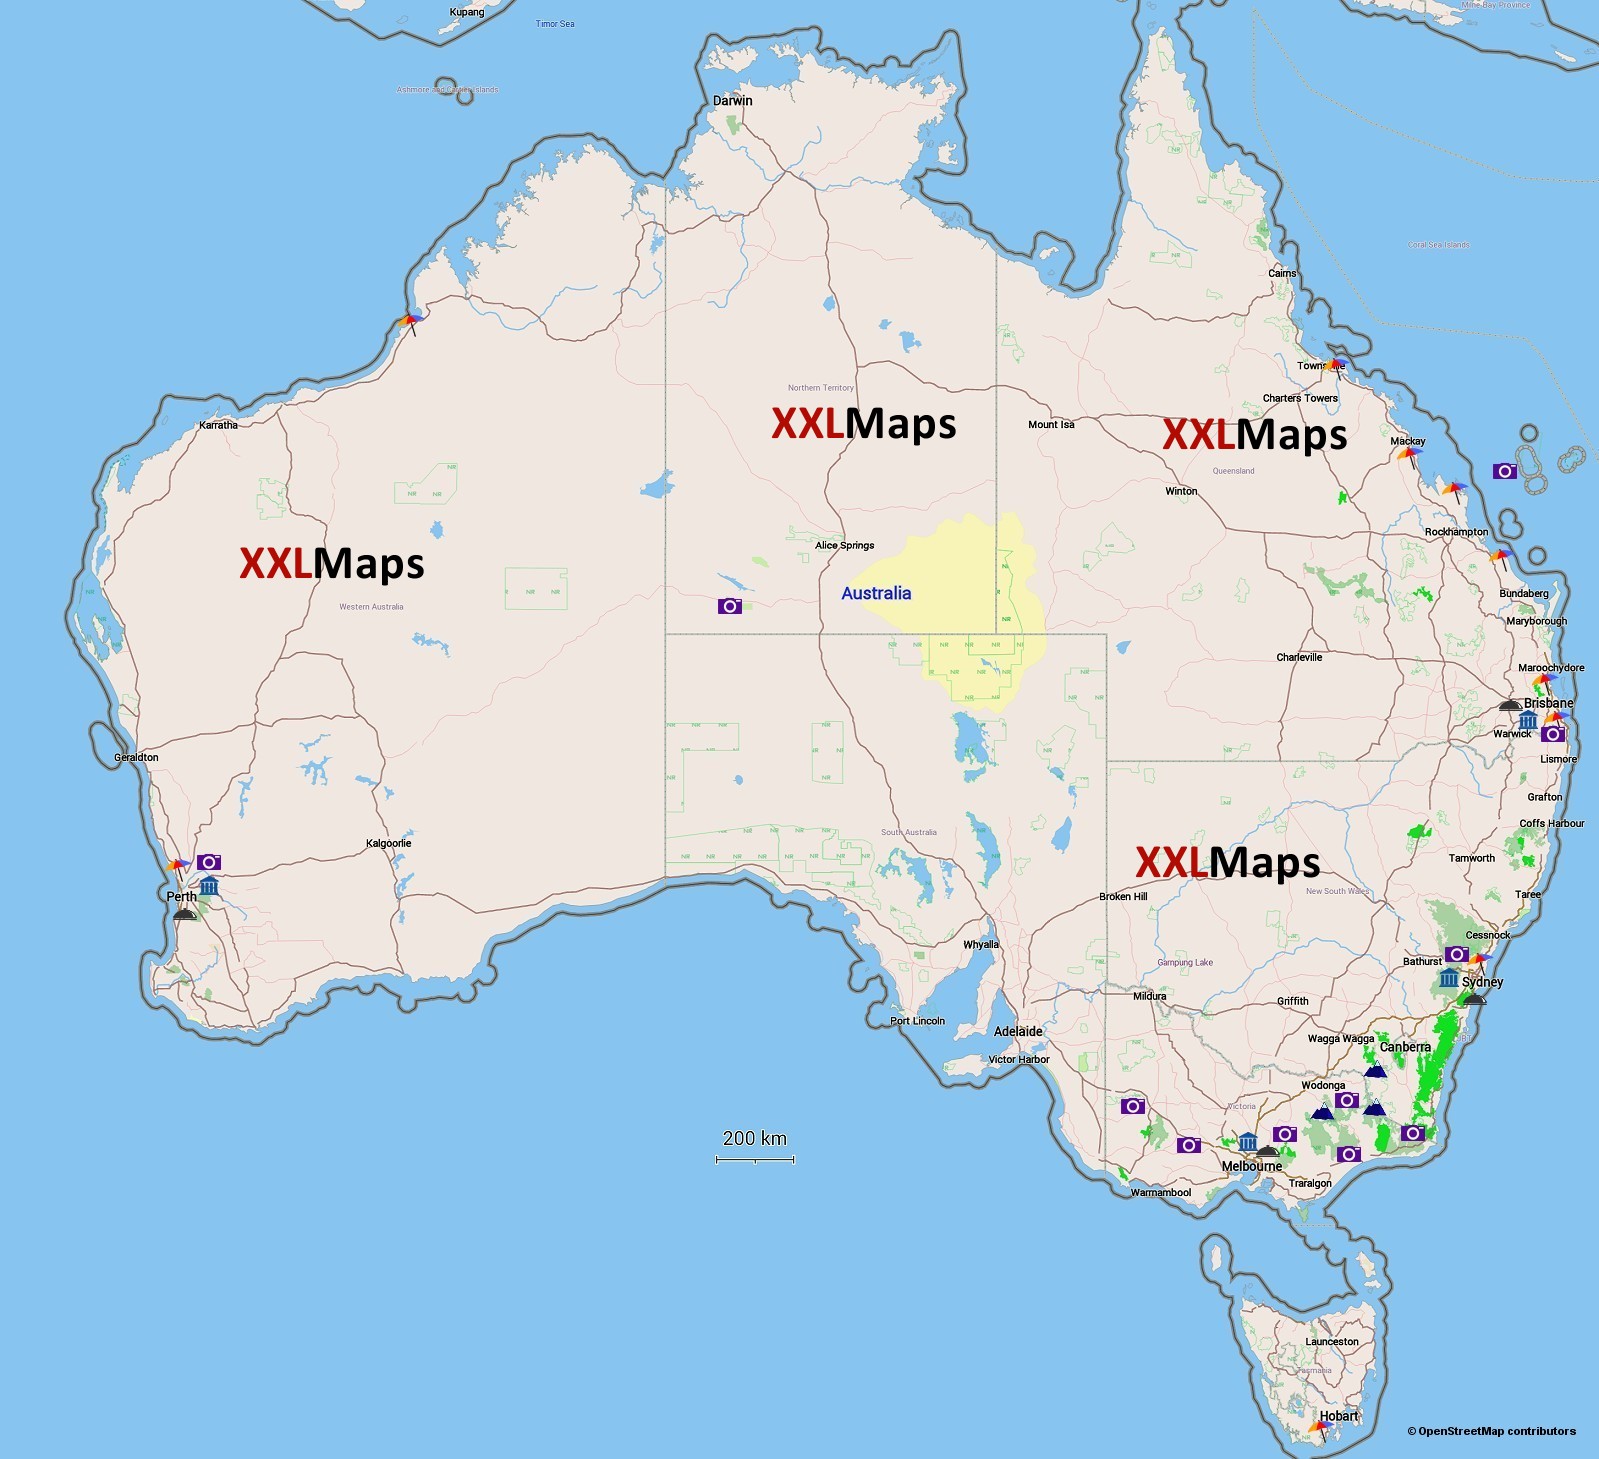 Turist kart over Australia